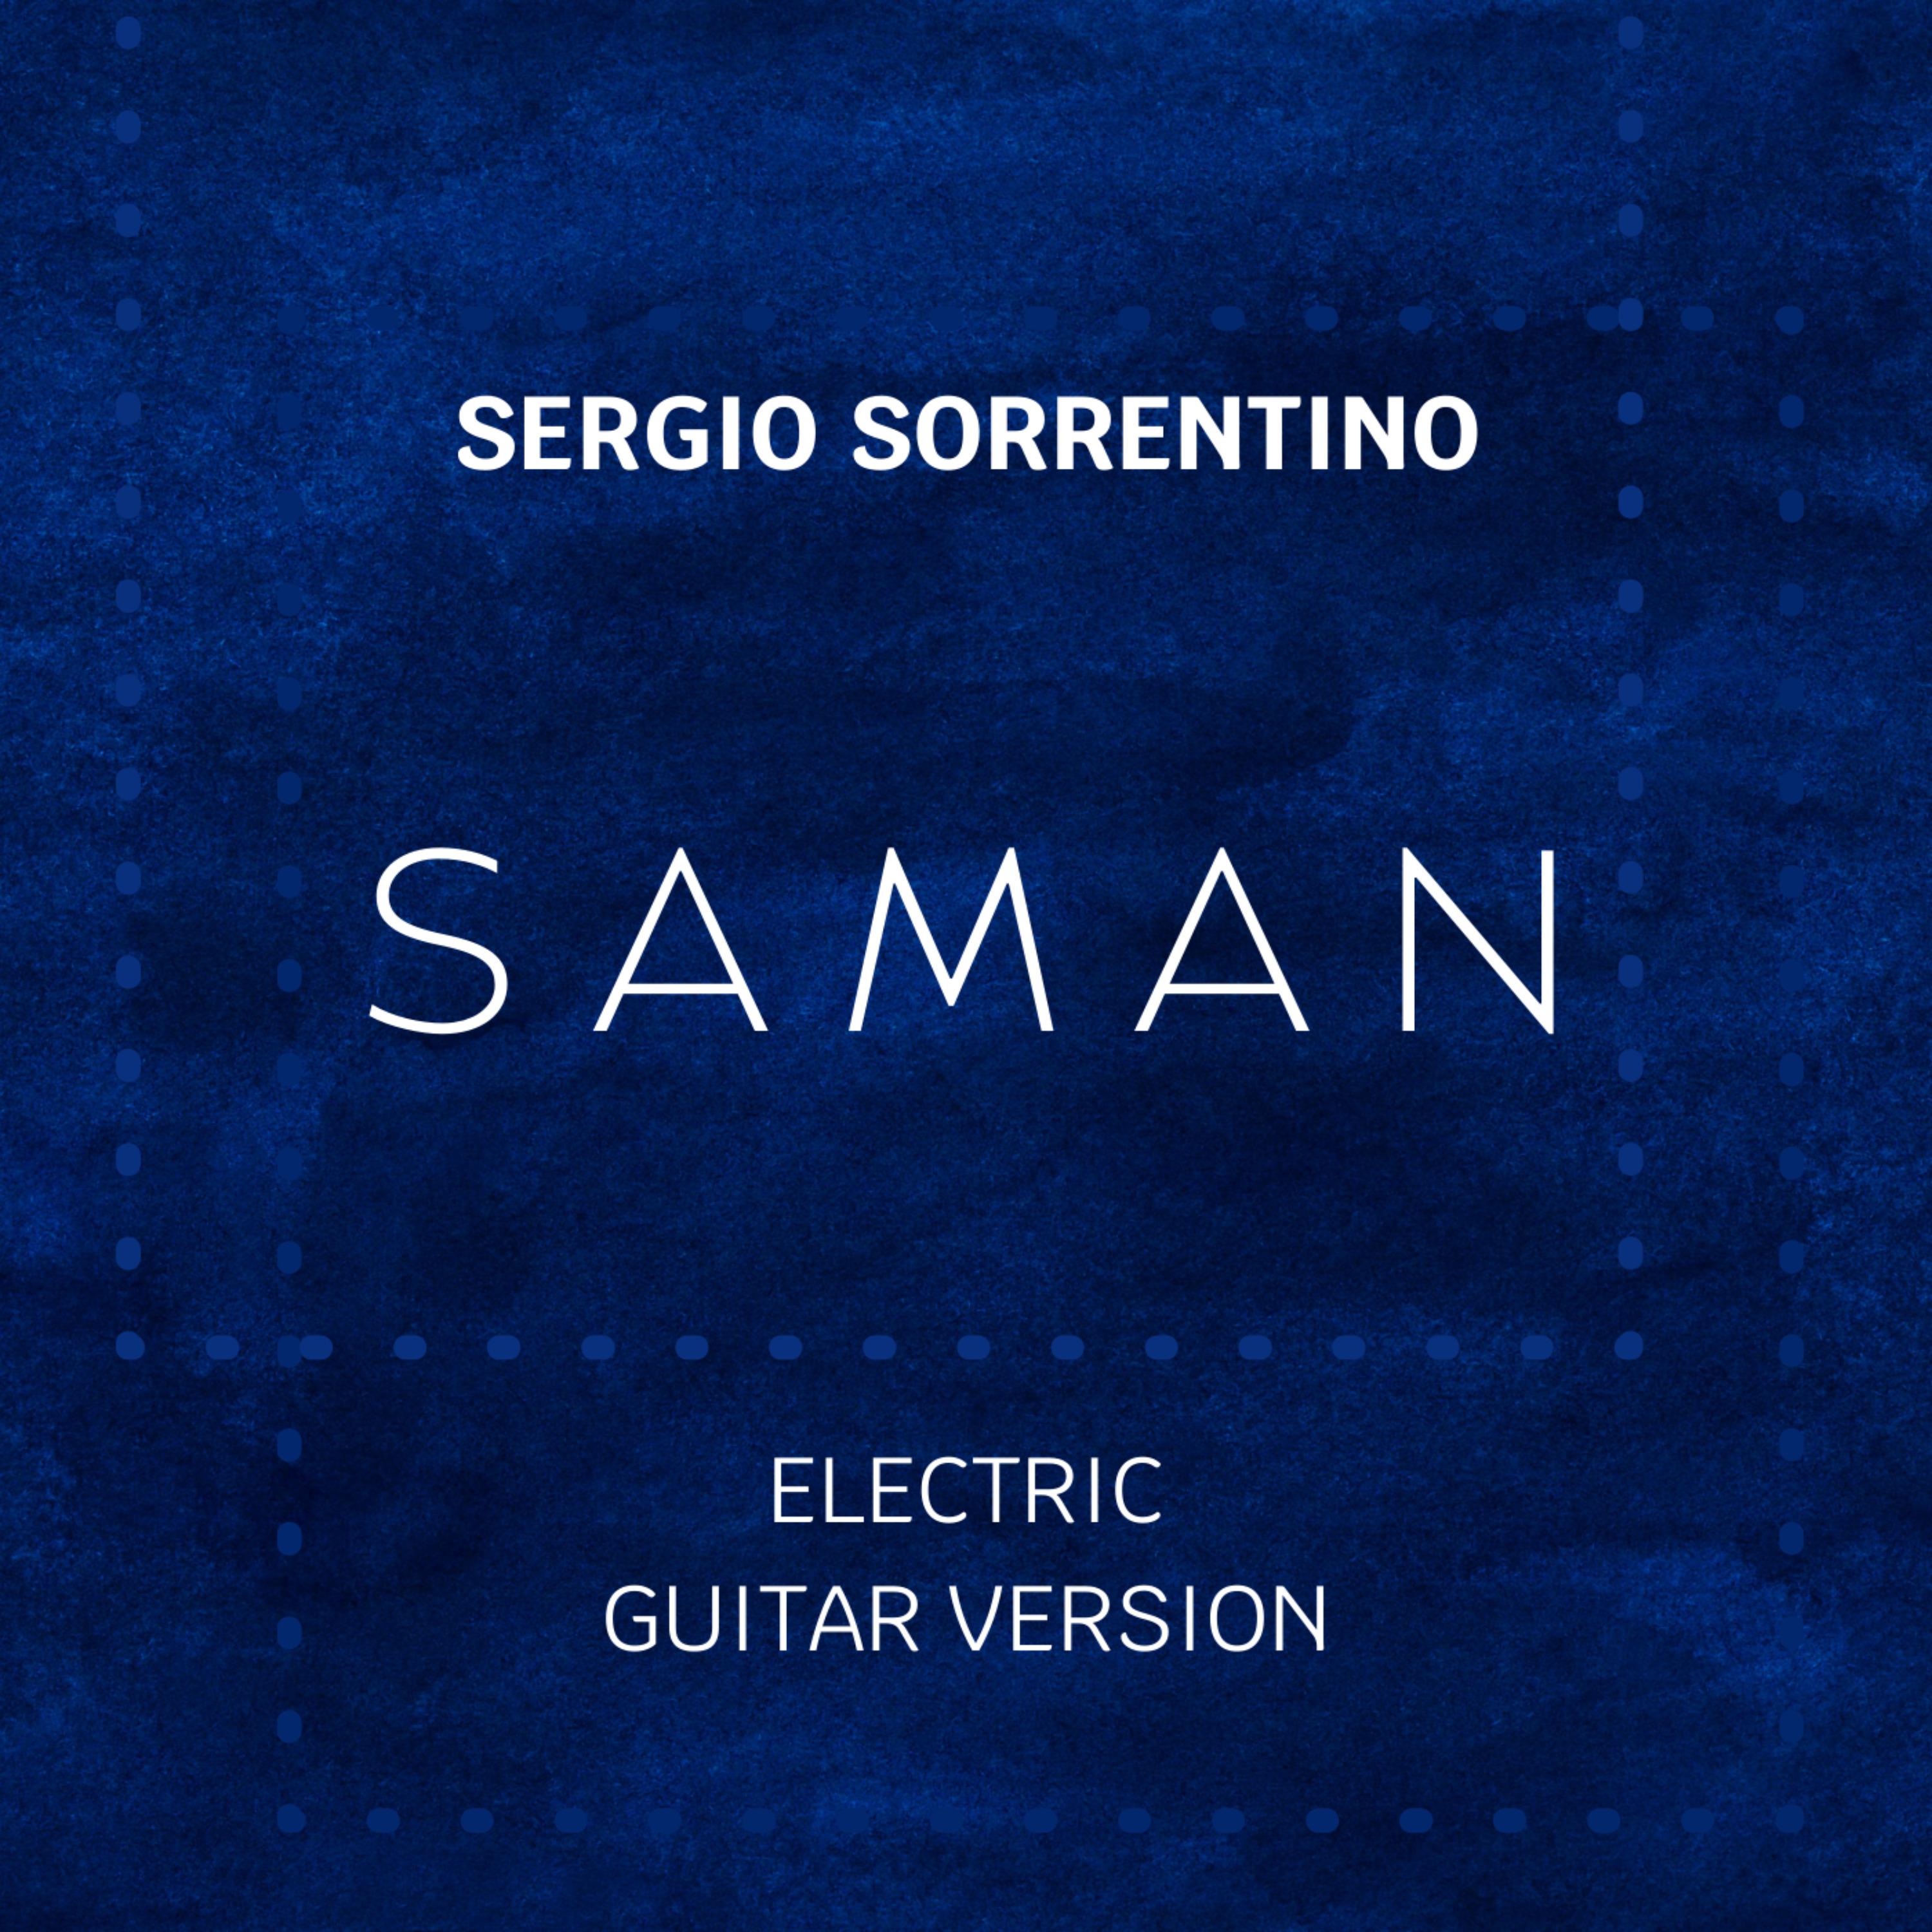 Sergio Sorrentino - saman (electric guitar version)